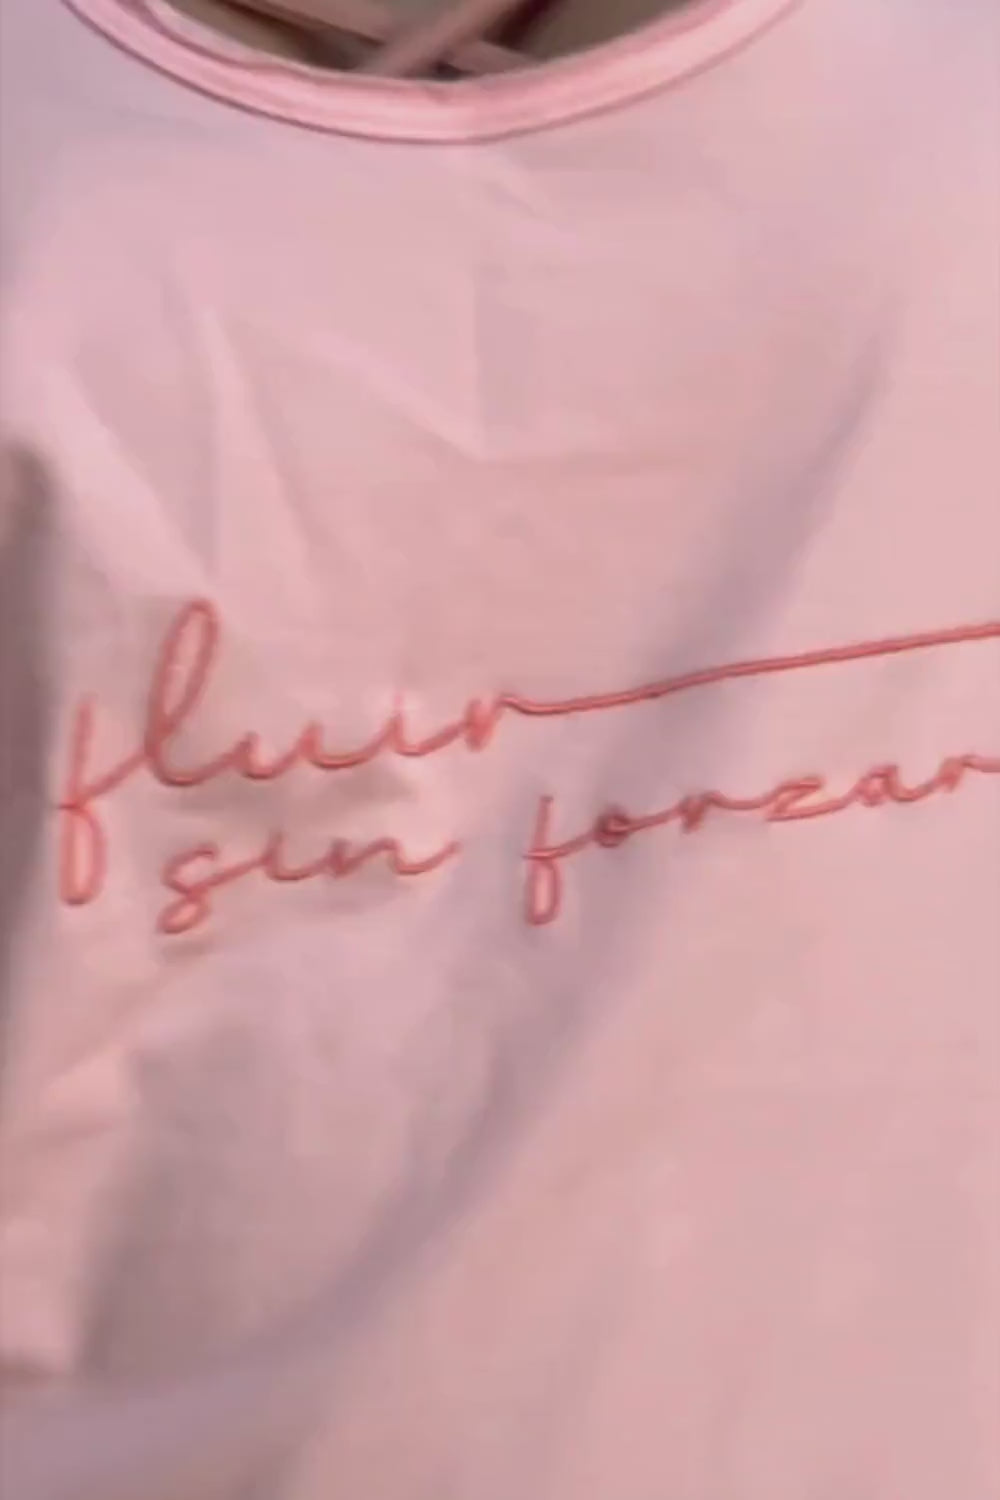 Camiseta Fluir Tank, modelo estilo nadadora en color rosa Rose Shadow Yogimi. Camiseta tirantes holgada con mantra "Fluir sin forzar".